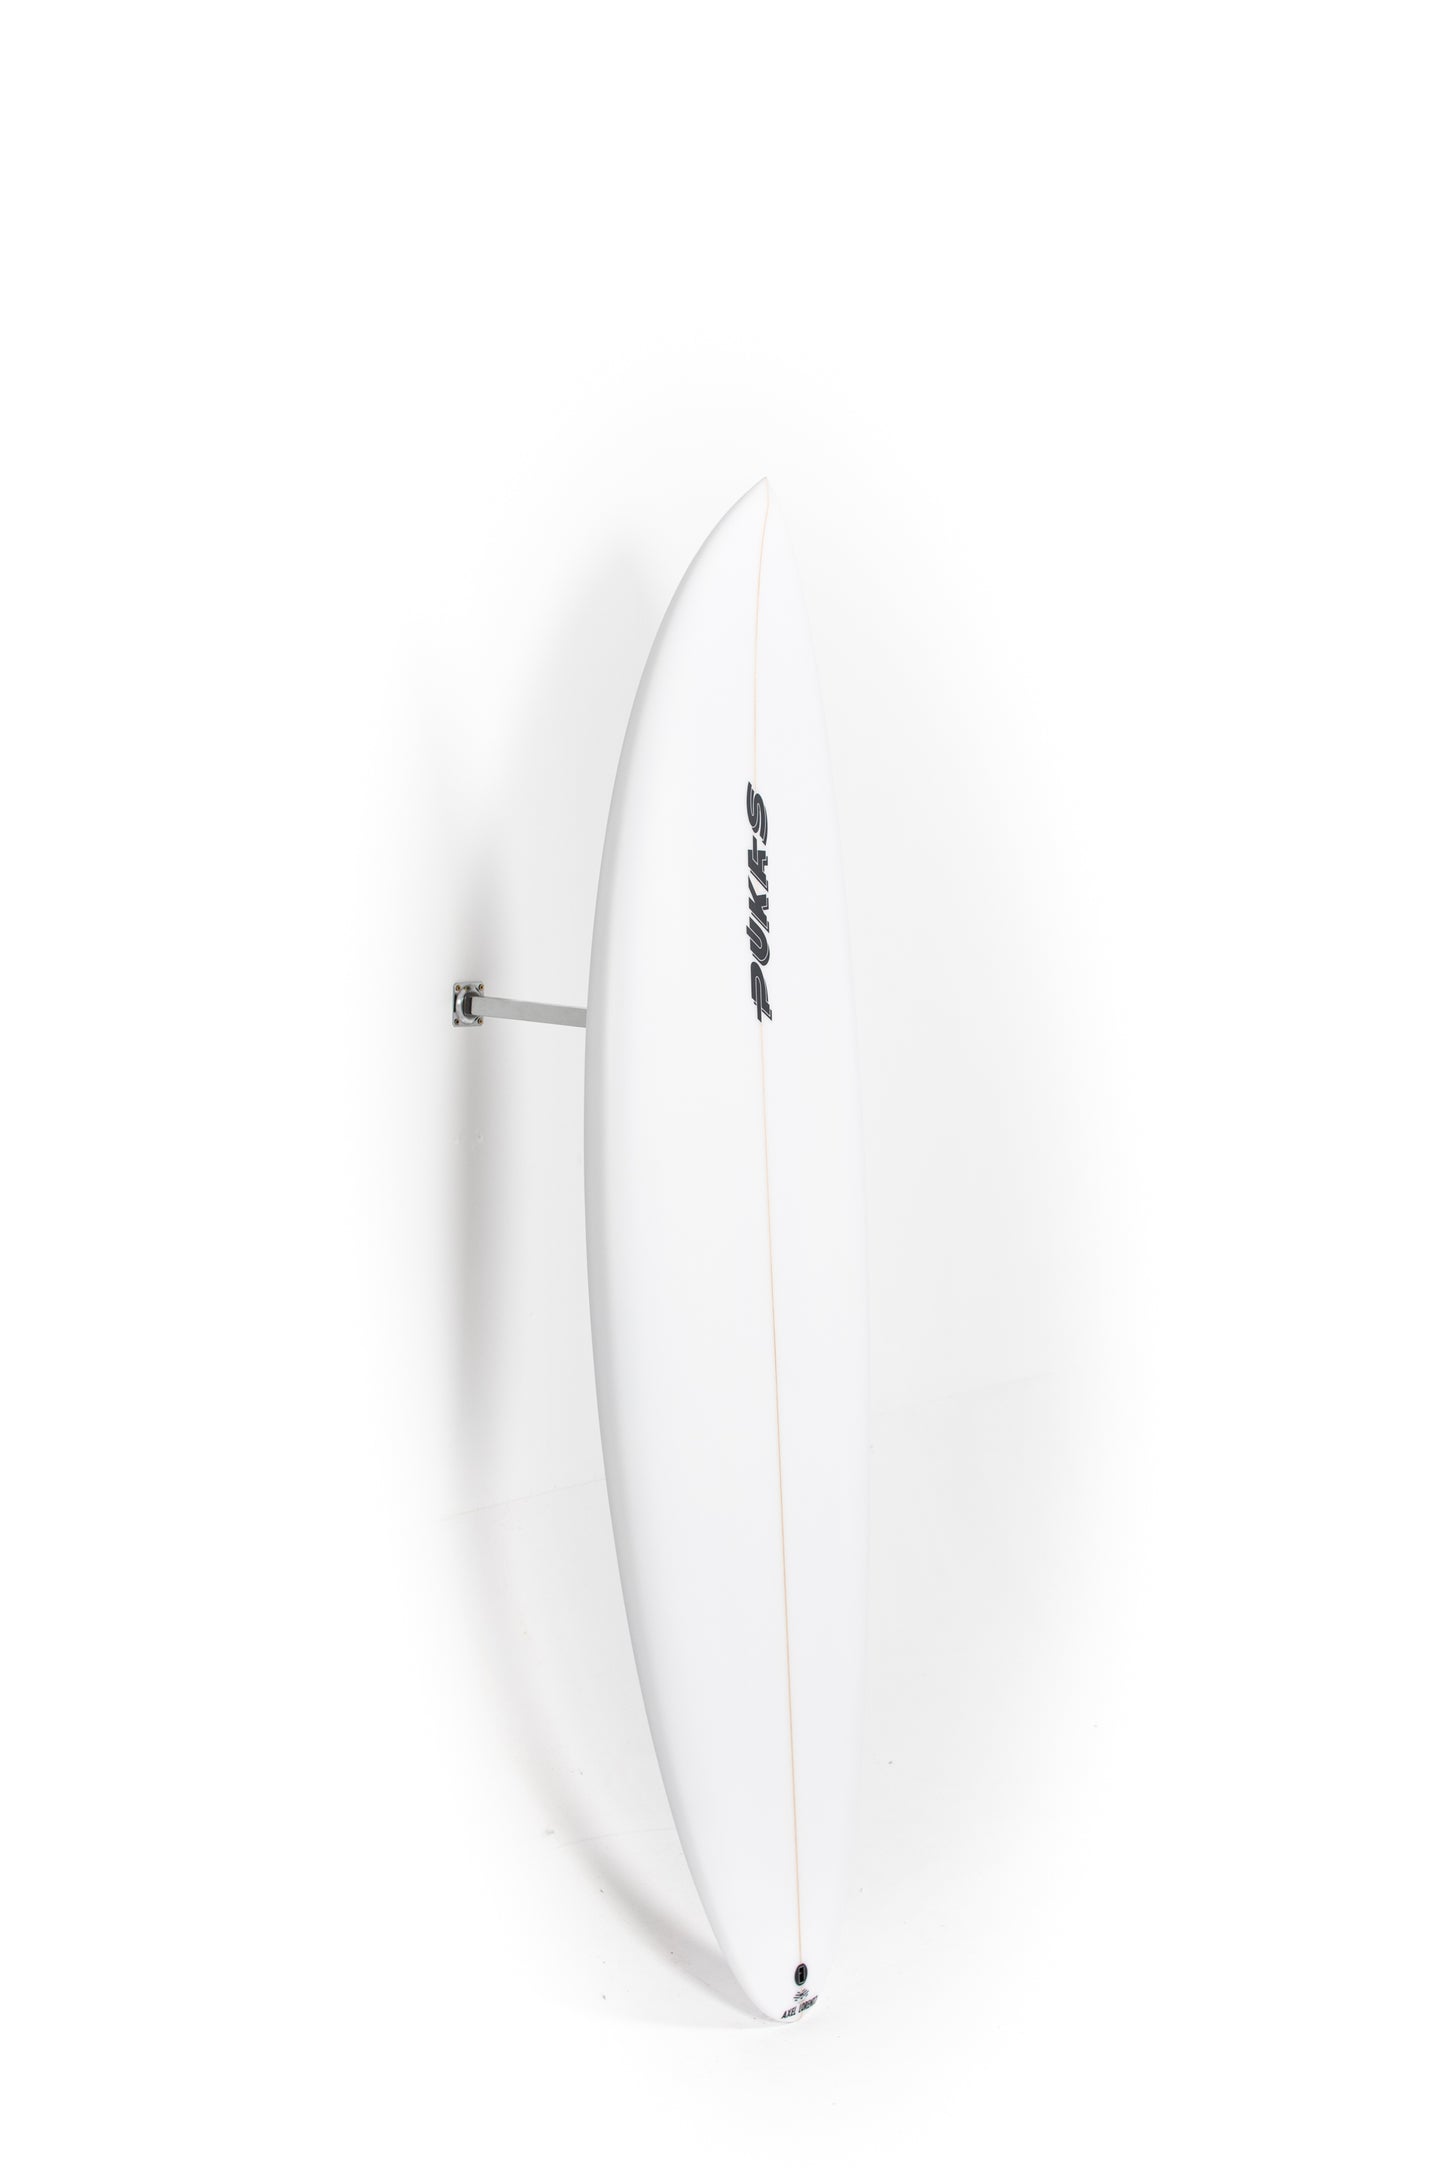 
                  
                    Pukas Surf Shop - Pukas Surfboard - ORIGINAL 69 by Axel Lorentz - 6’4” x 21,50 x 2,88 - 42,69L - AX09871
                  
                